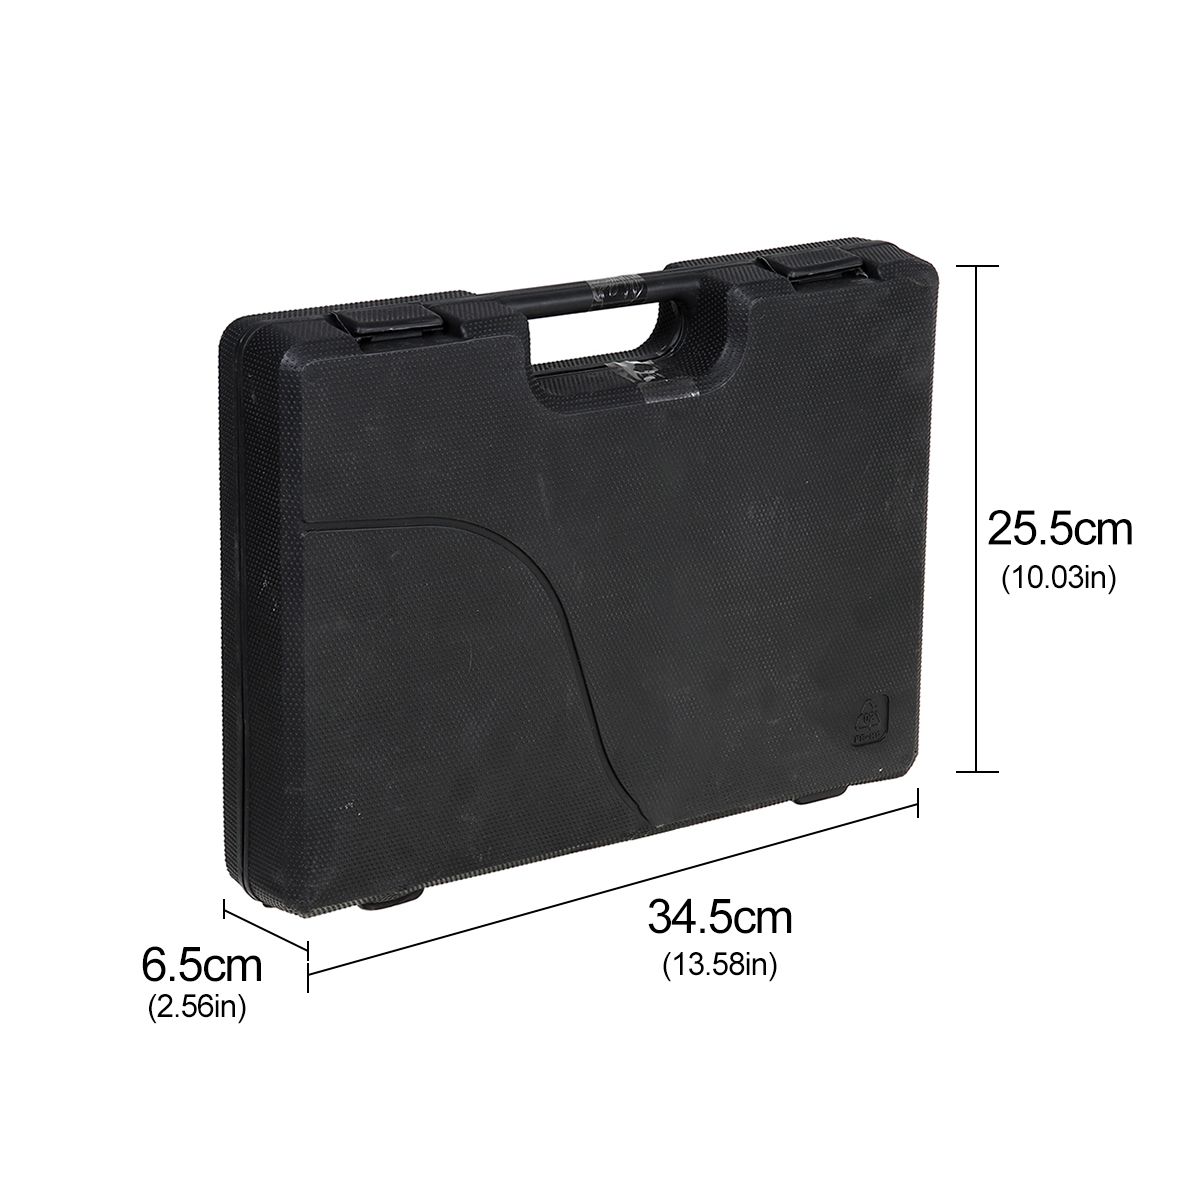 7PCS-Large-Black-Car-Dent-RepairRemoval-Hammer-Set-With-Portable-Tool-Box-Kits-1763381